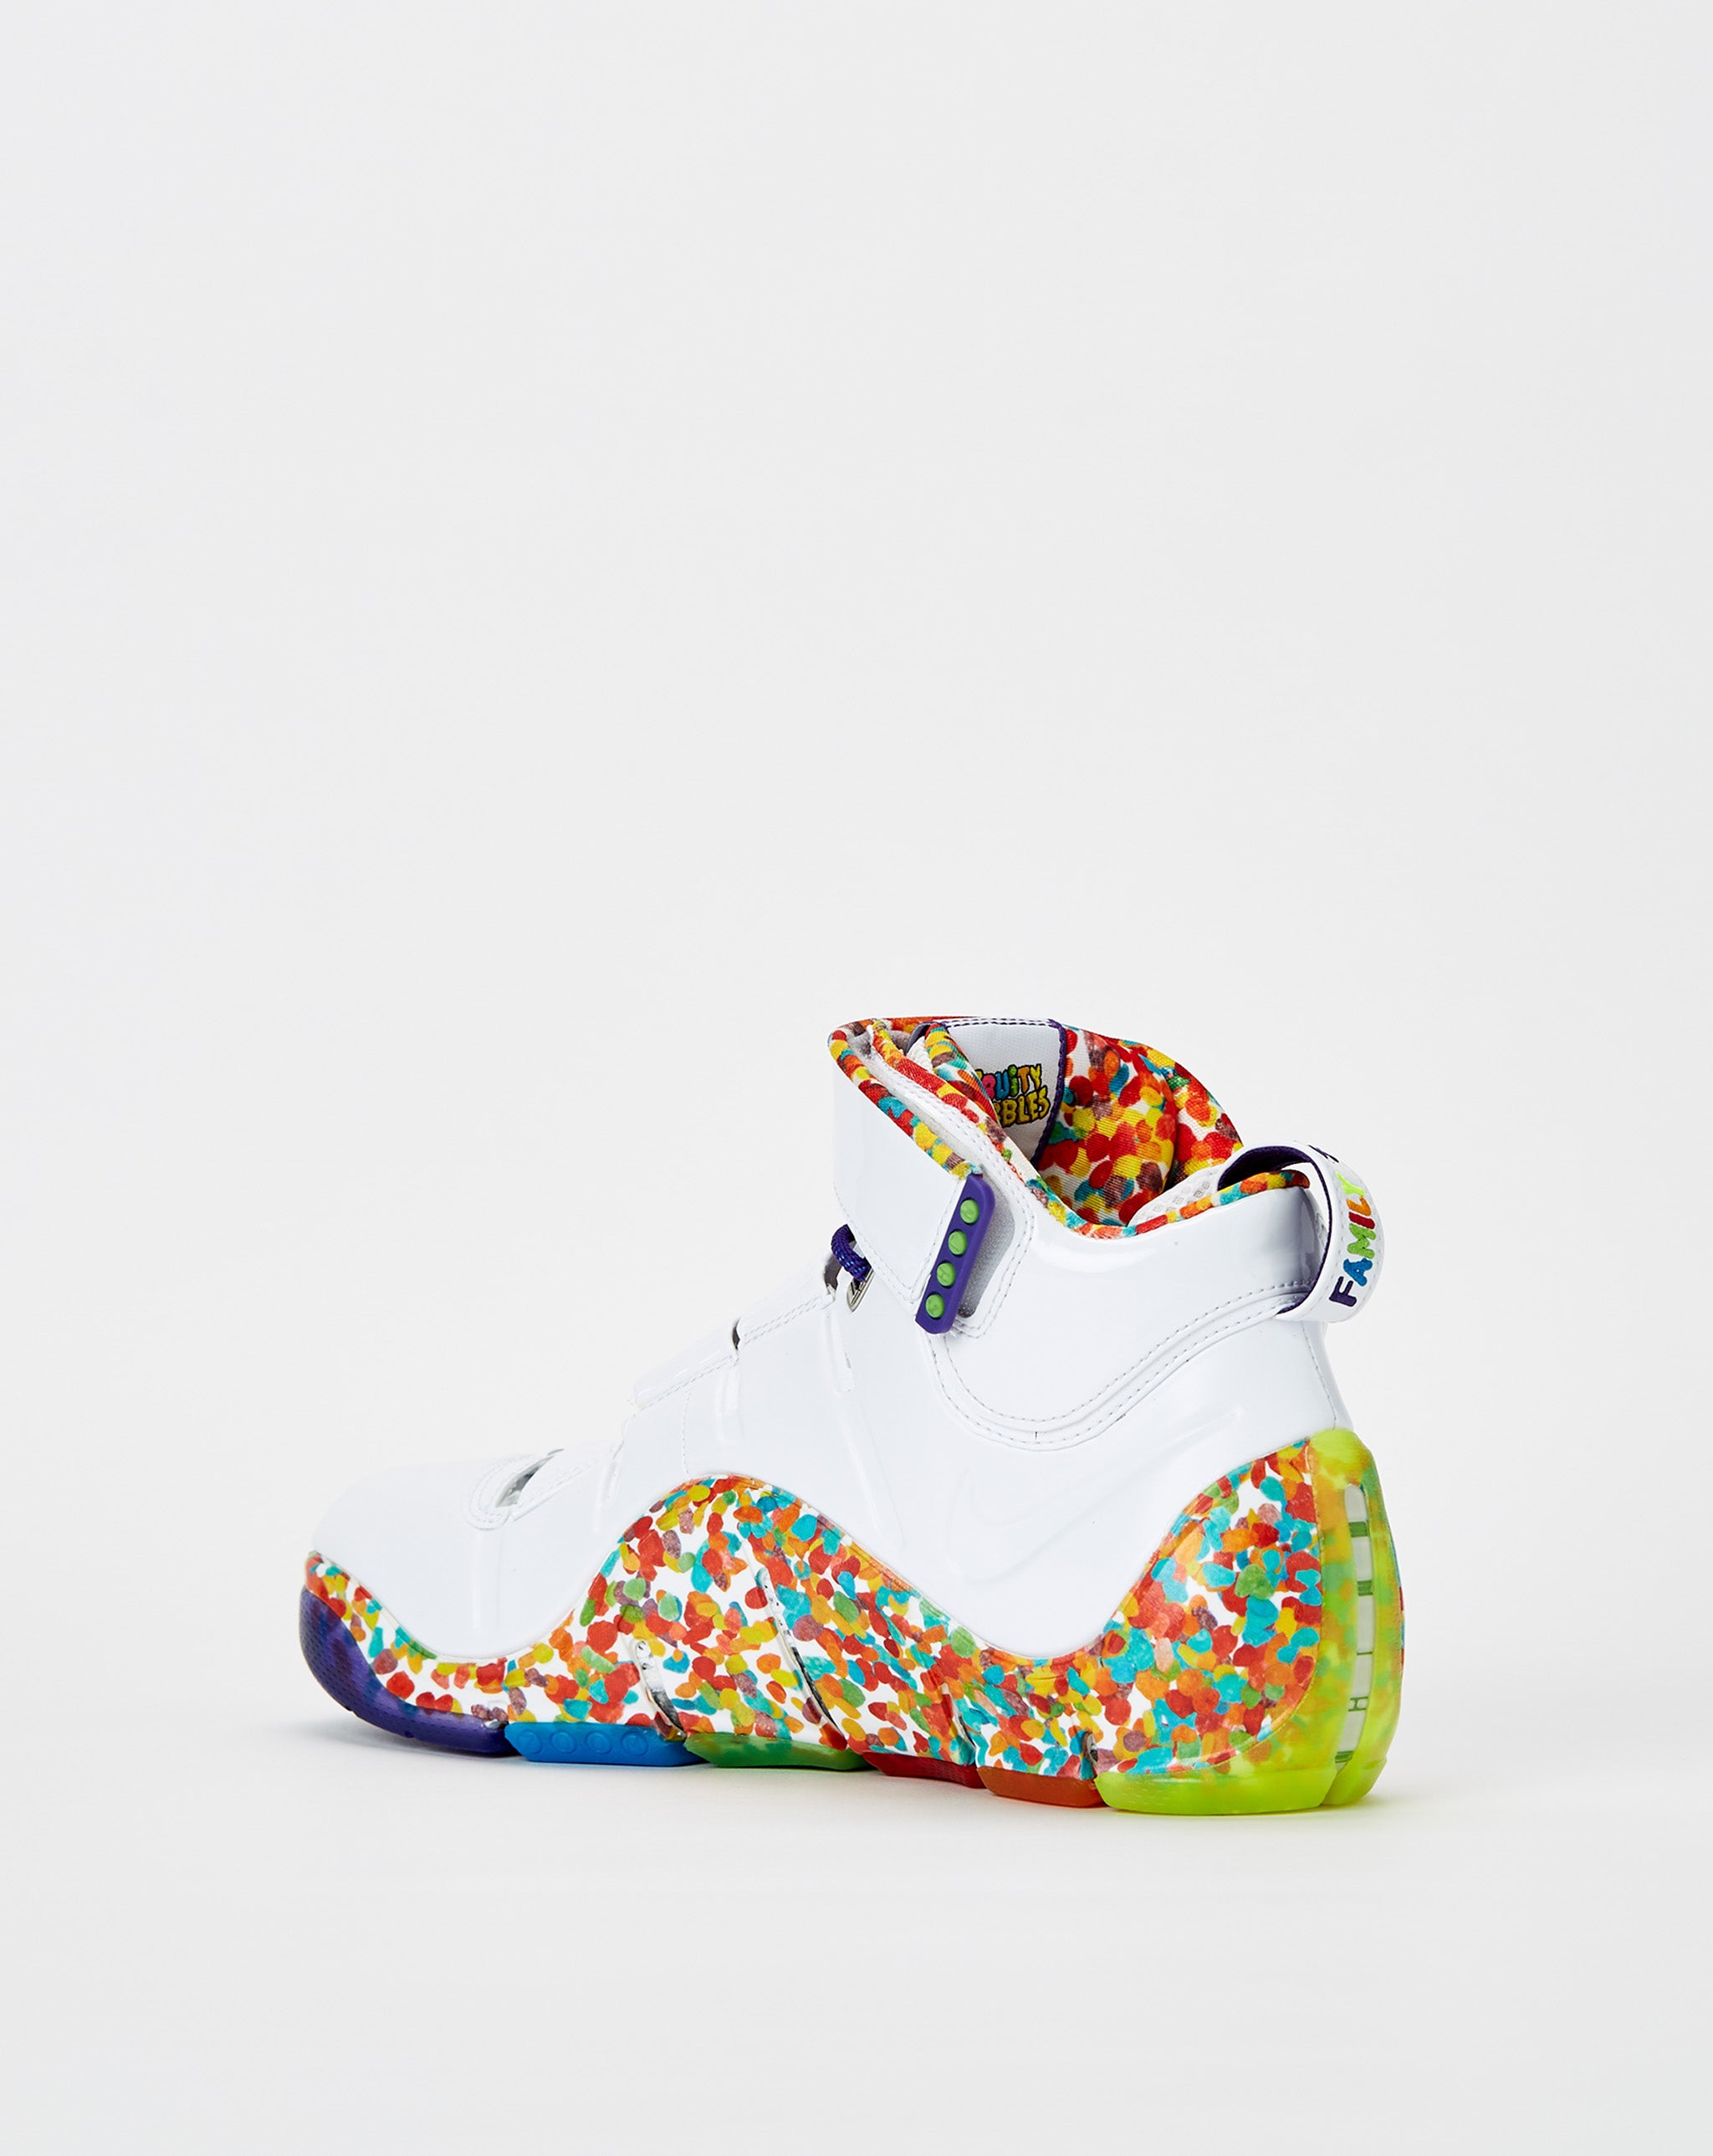 Nike LeBron IV 'Fruity Pebbles'  - Cheap Urlfreeze Jordan outlet